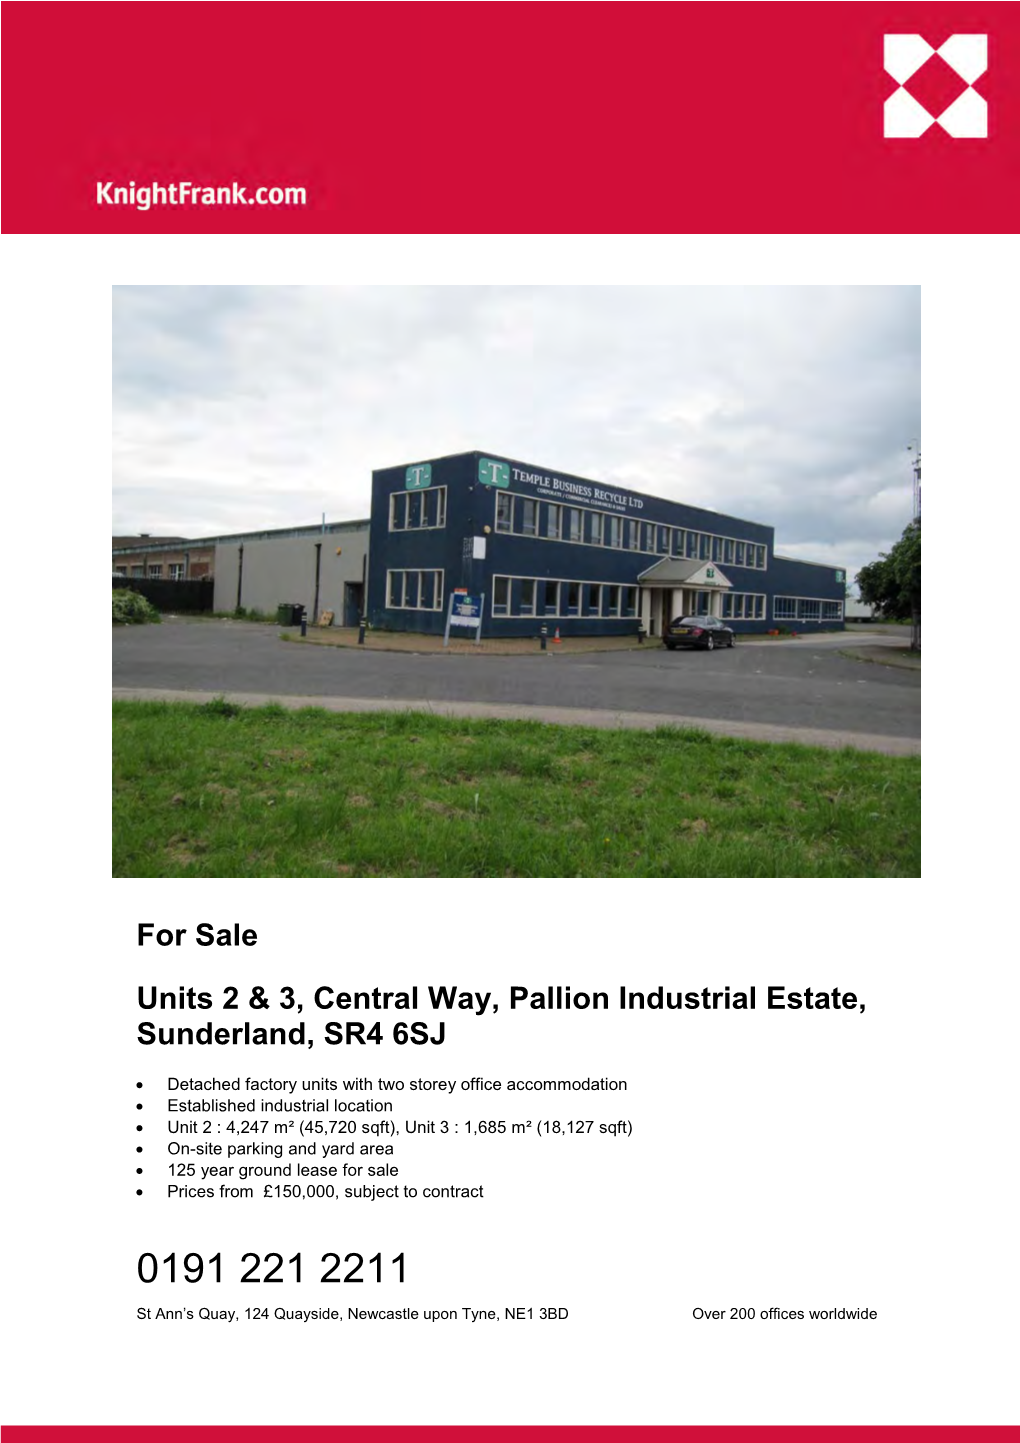 For Sale Units 2 & 3, Central Way, Pallion Industrial Estate